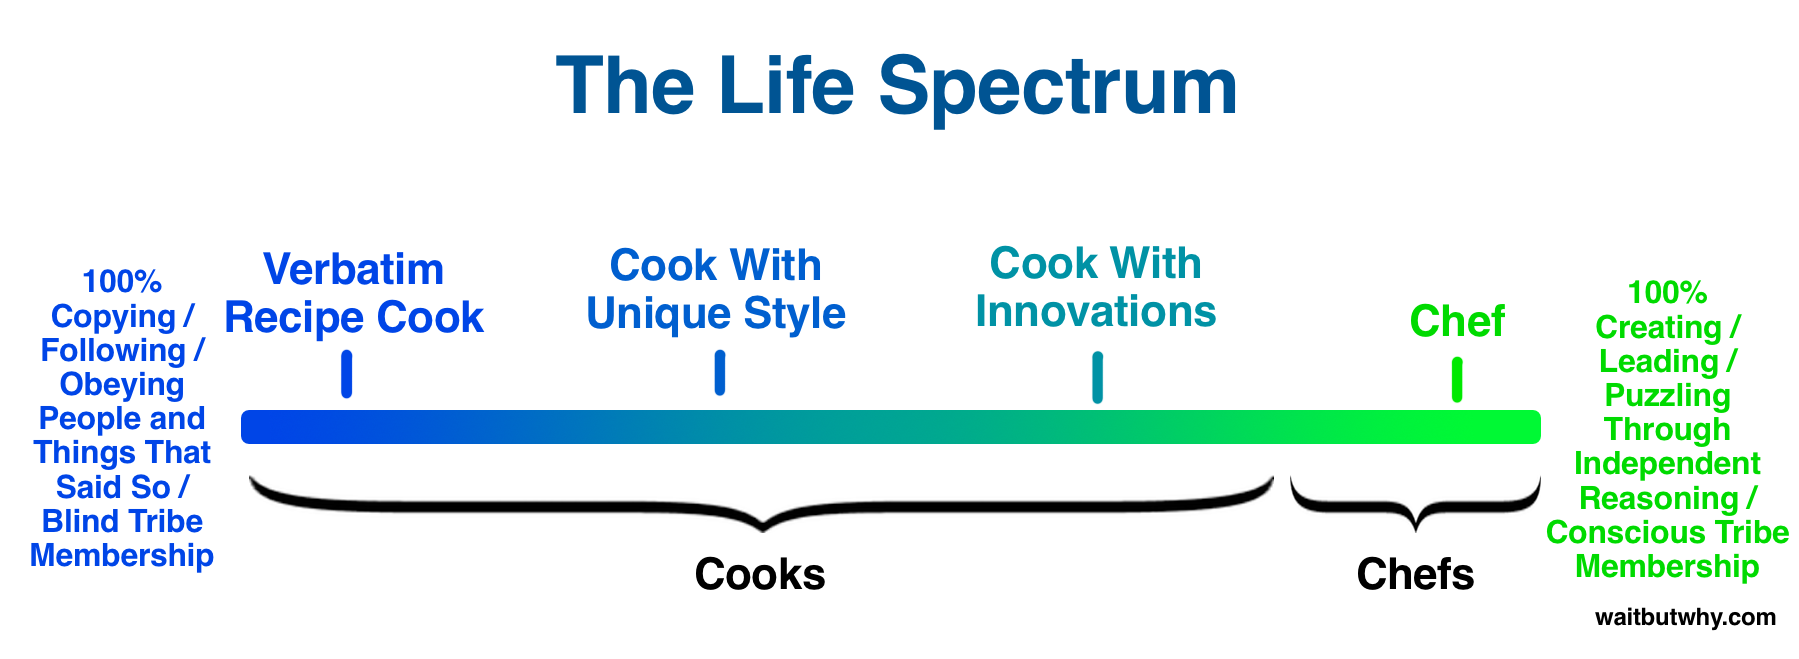 Chef-Cook Life Spectrum